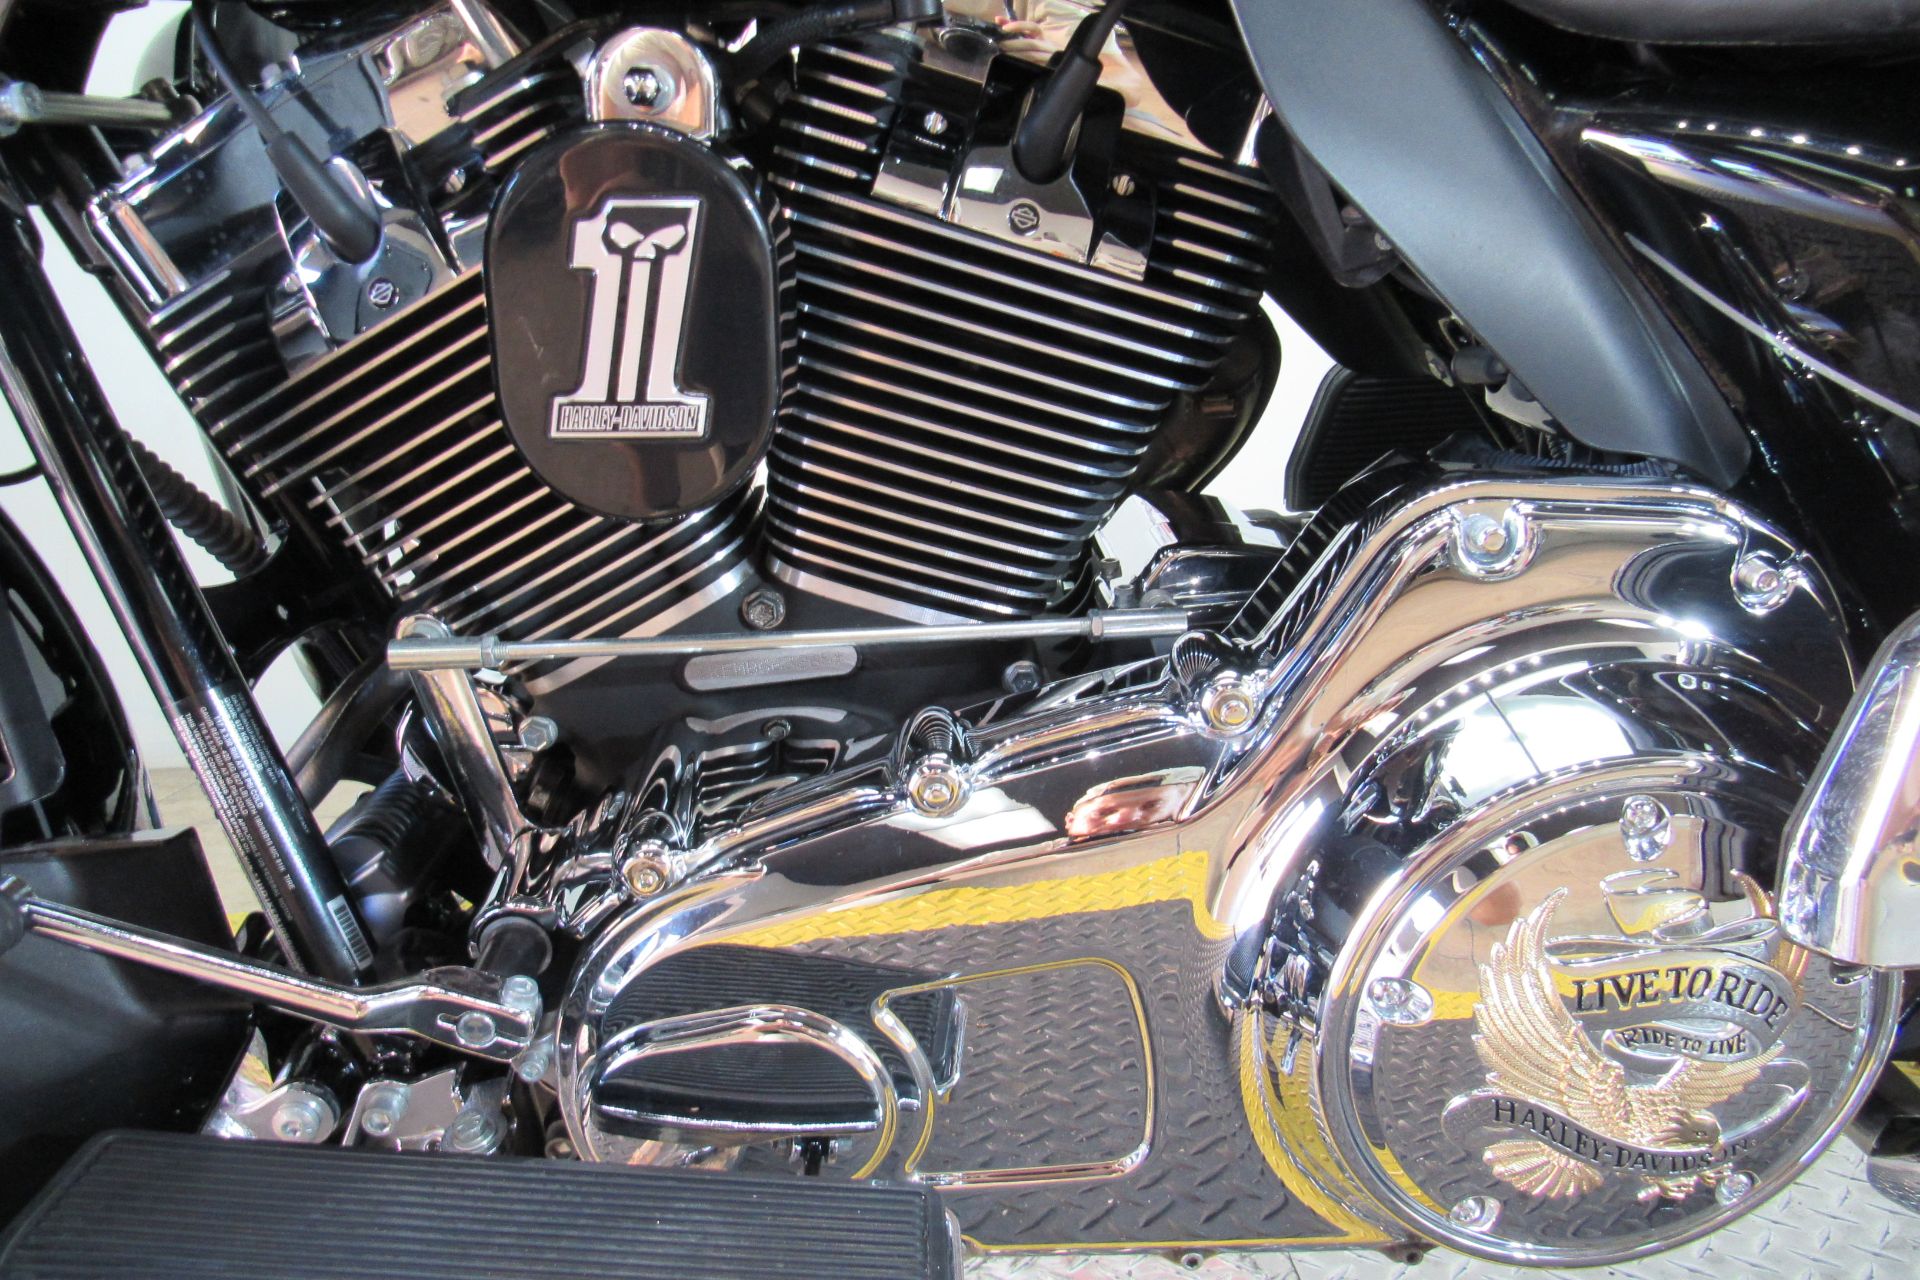 2011 Harley-Davidson Electra Glide® Ultra Limited in Temecula, California - Photo 8